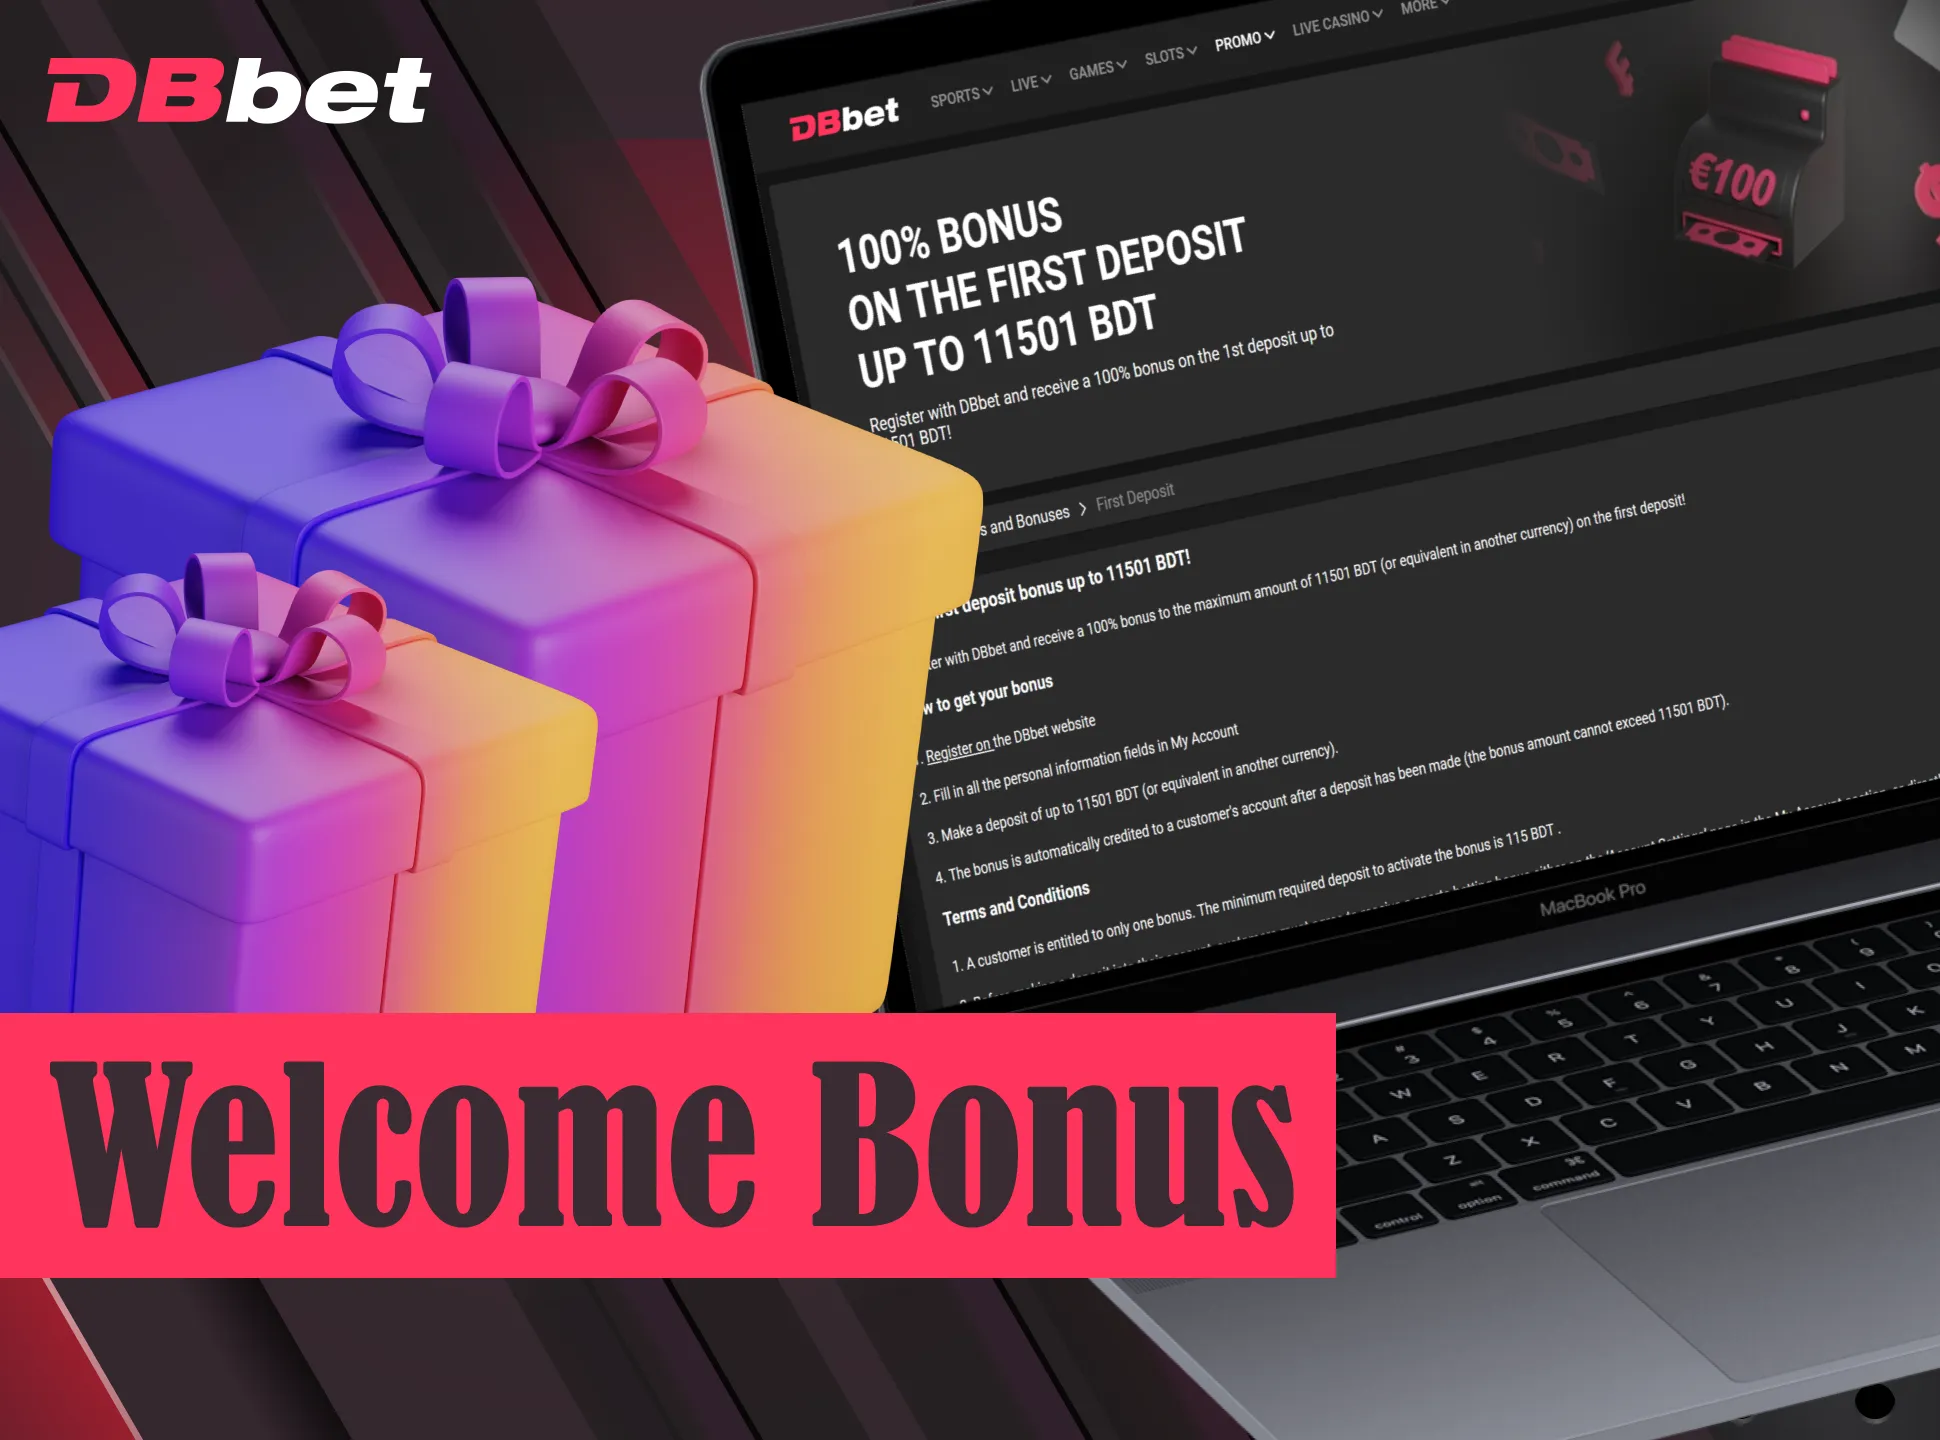 Get your DBbet welcome bonus after making first deposit.